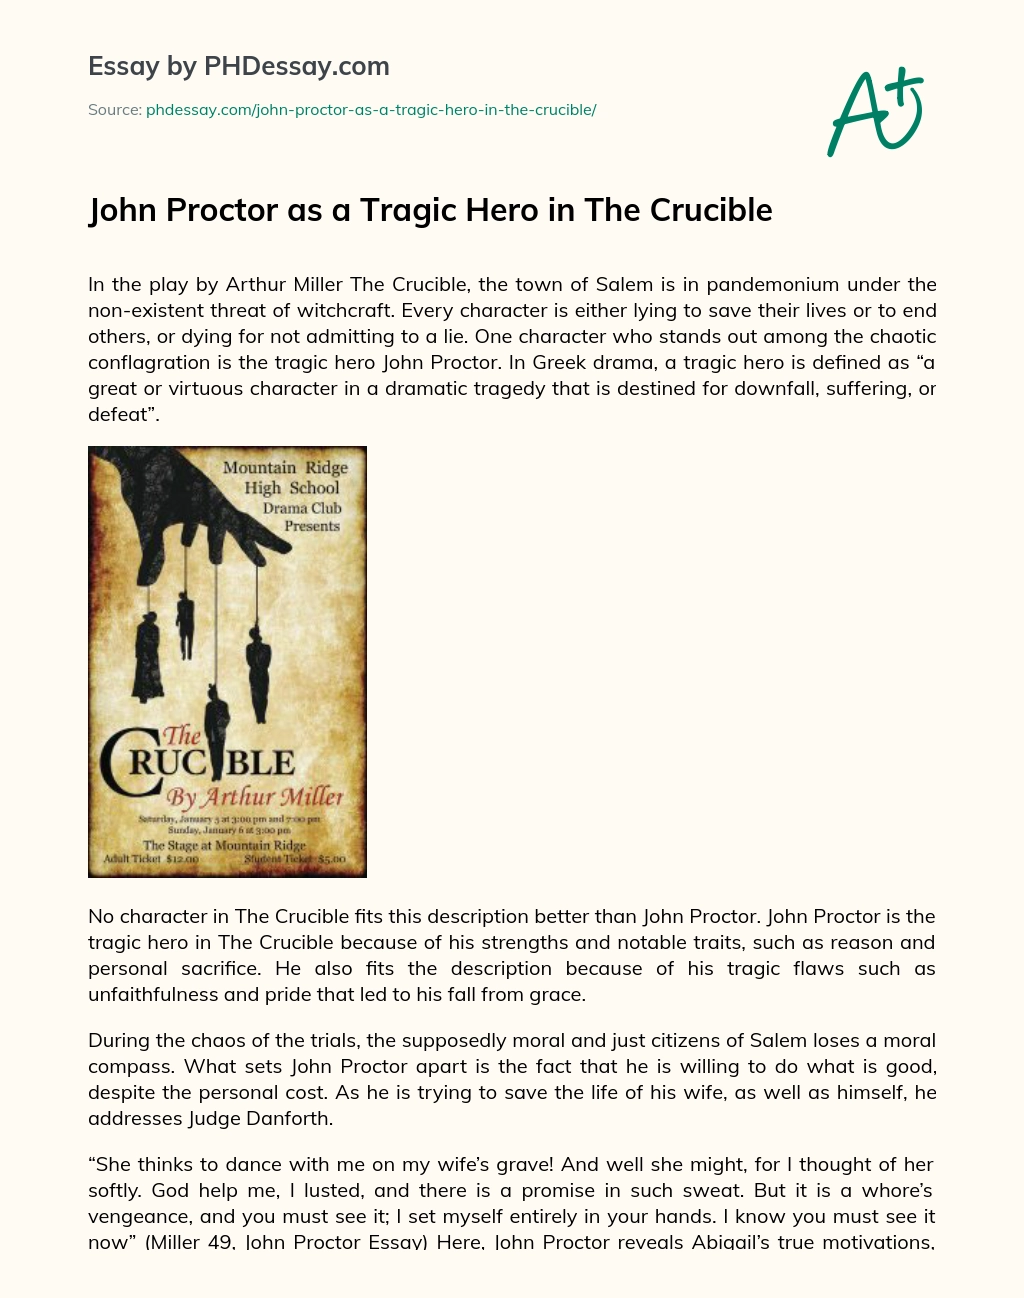 John Proctor as a Tragic Hero in The Crucible essay